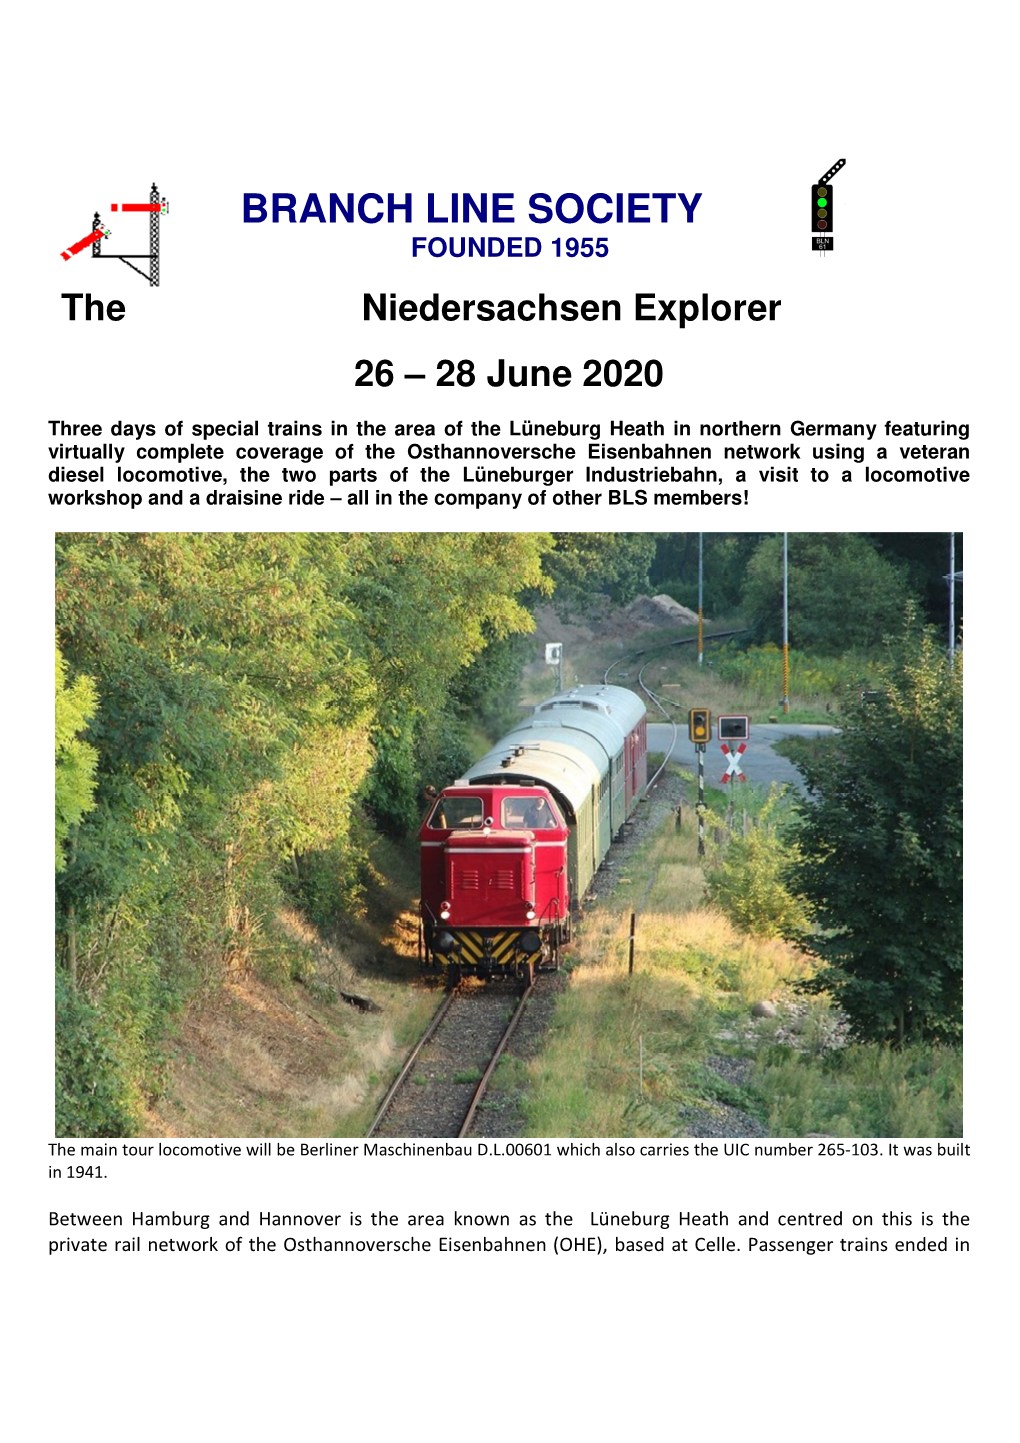 BRANCH LINE SOCIETY FOUNDED 1955 the Niedersachsen Explorer 26 – 28 June 2020